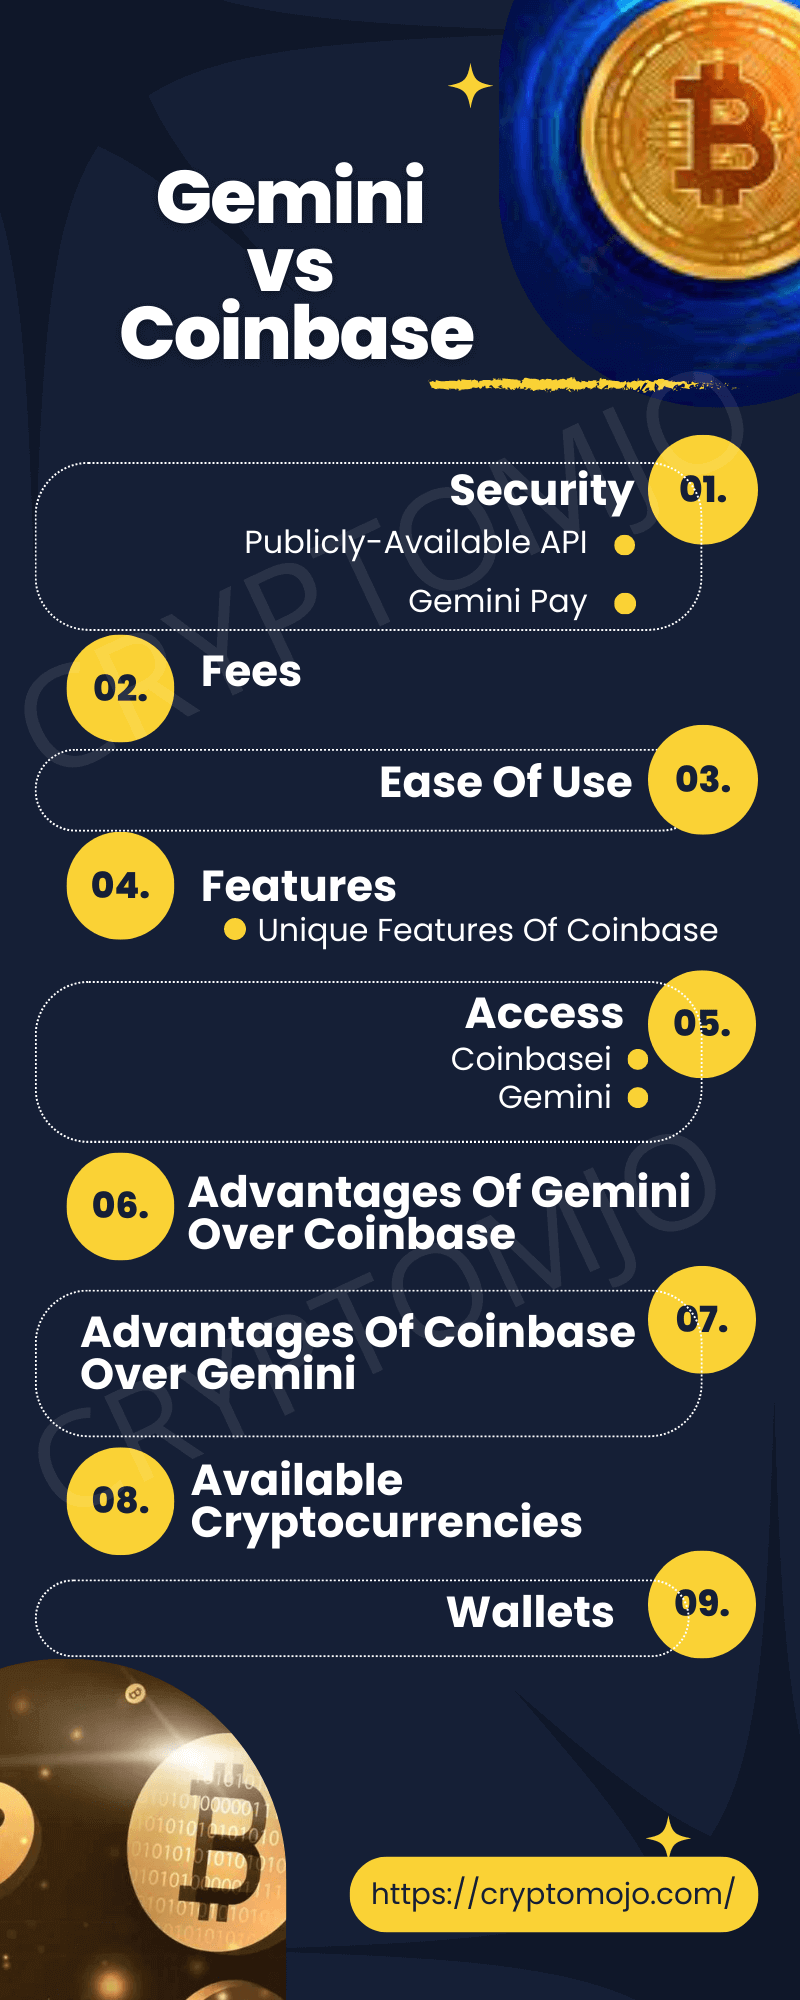 Gemini vs Coinbase overview